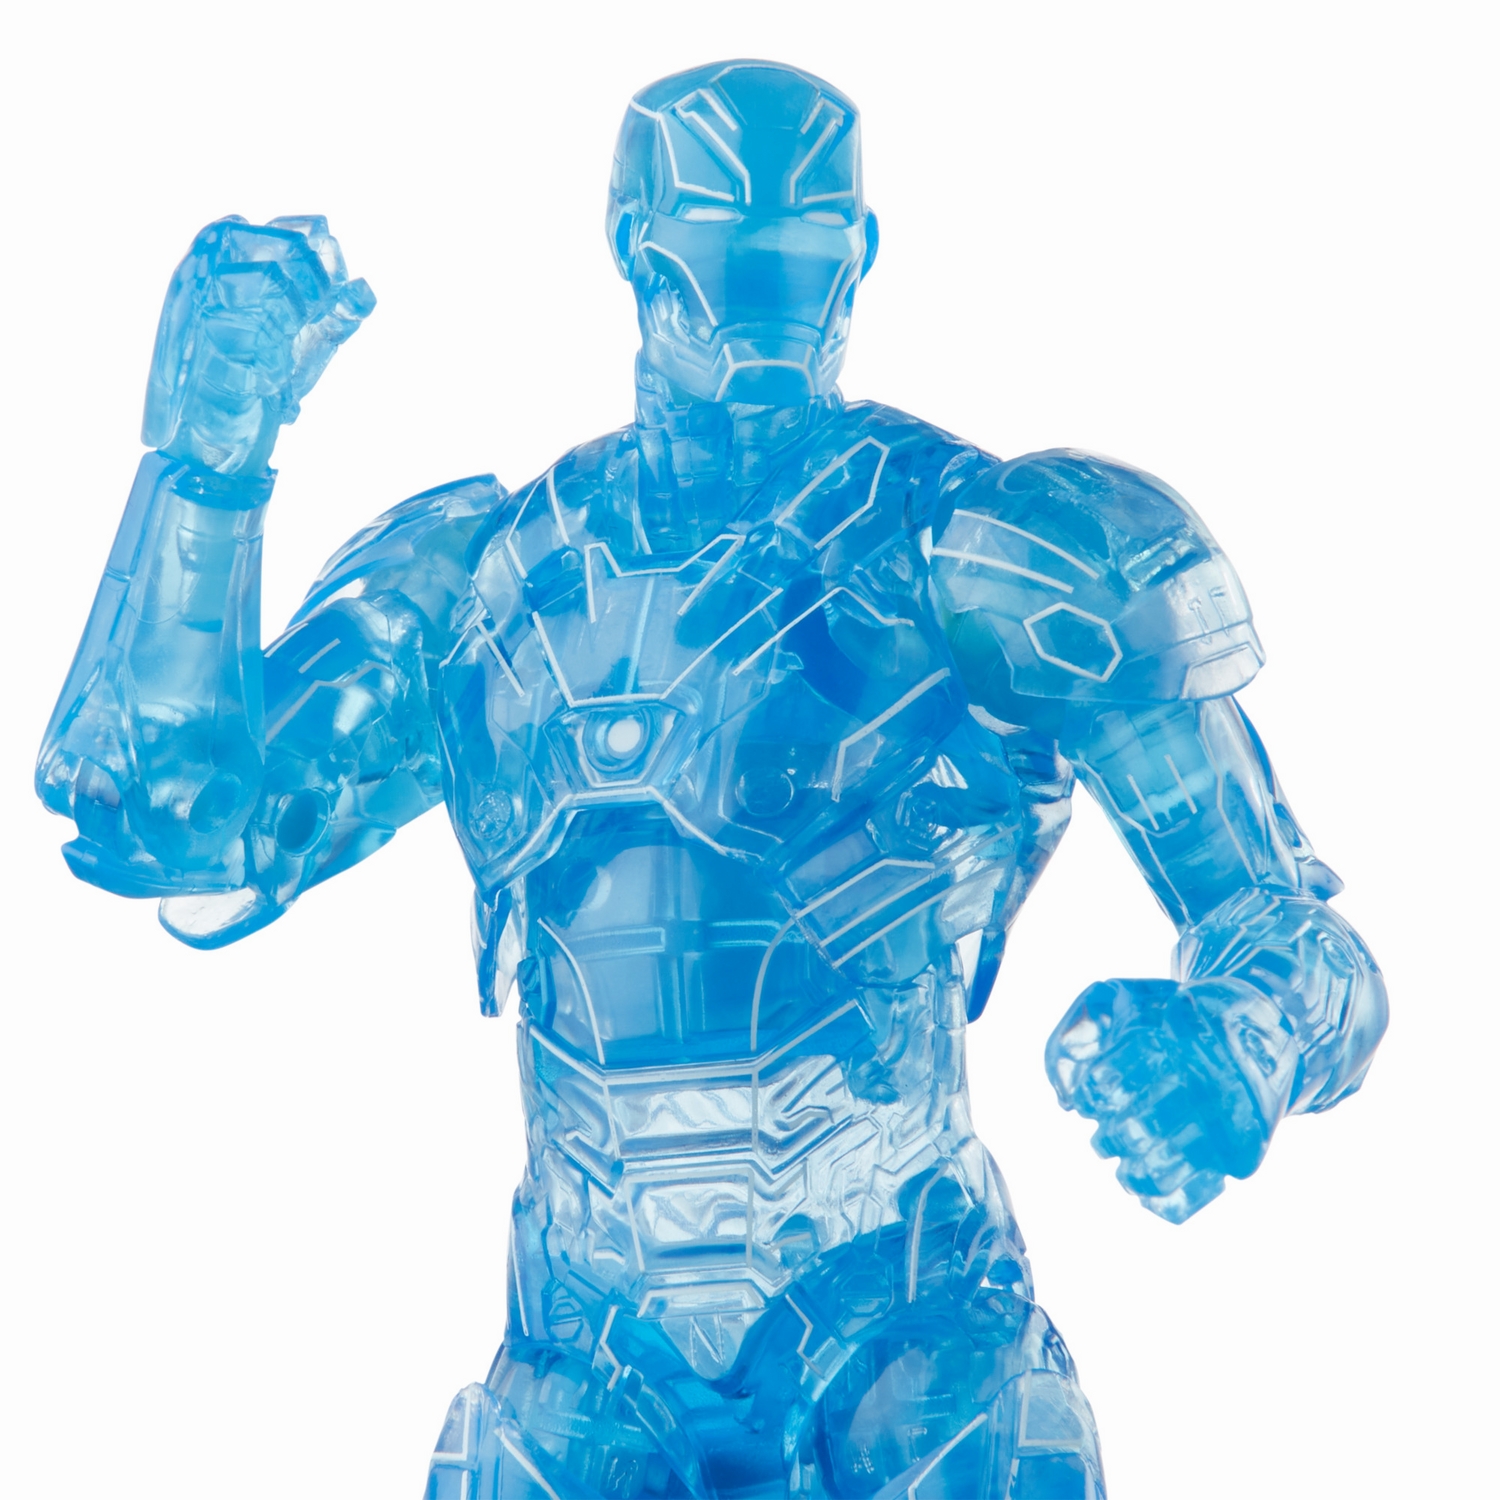 MARVEL LEGENDS SERIES 6-INCH IRON MAN Figure Assortment - Hologram Iron Man - oop (1).jpg